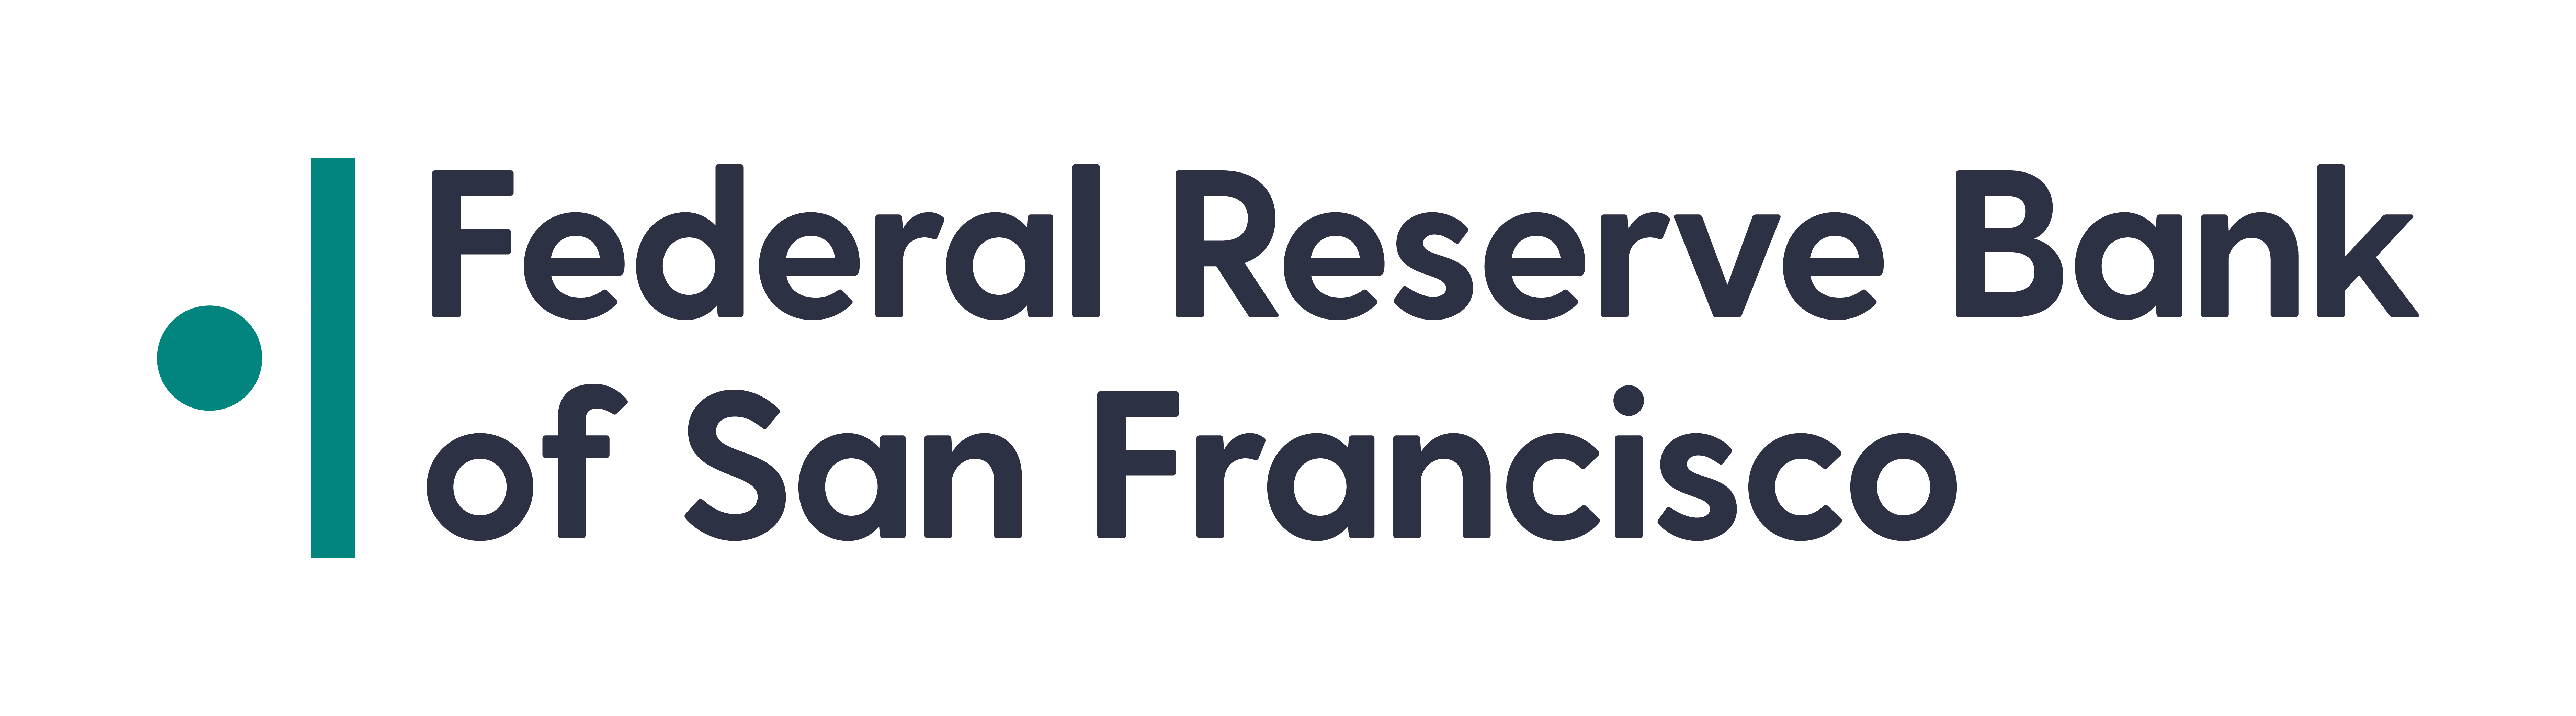 Federal Reserve Bank of San Francisco logo